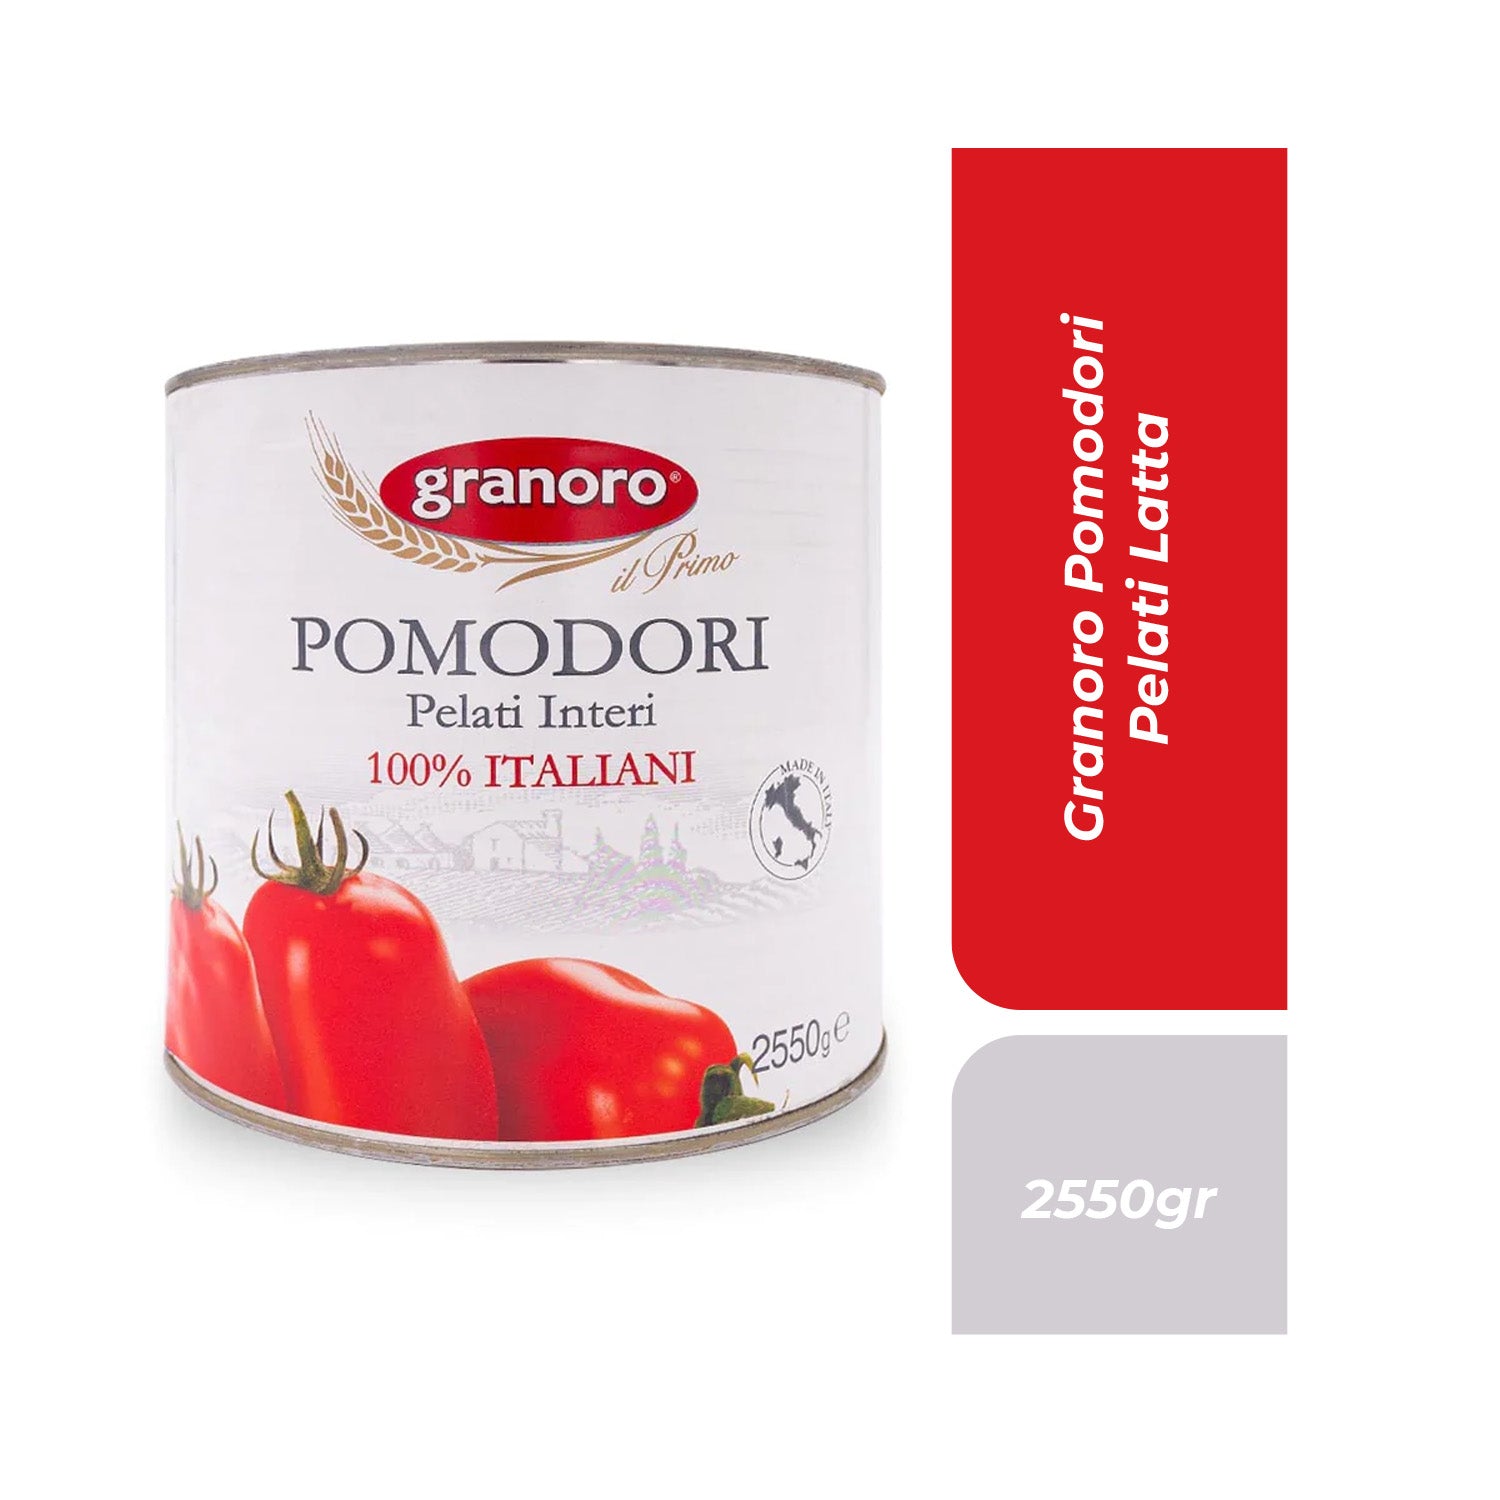 Granoro Pomodori Pelati Latta 2550gr.